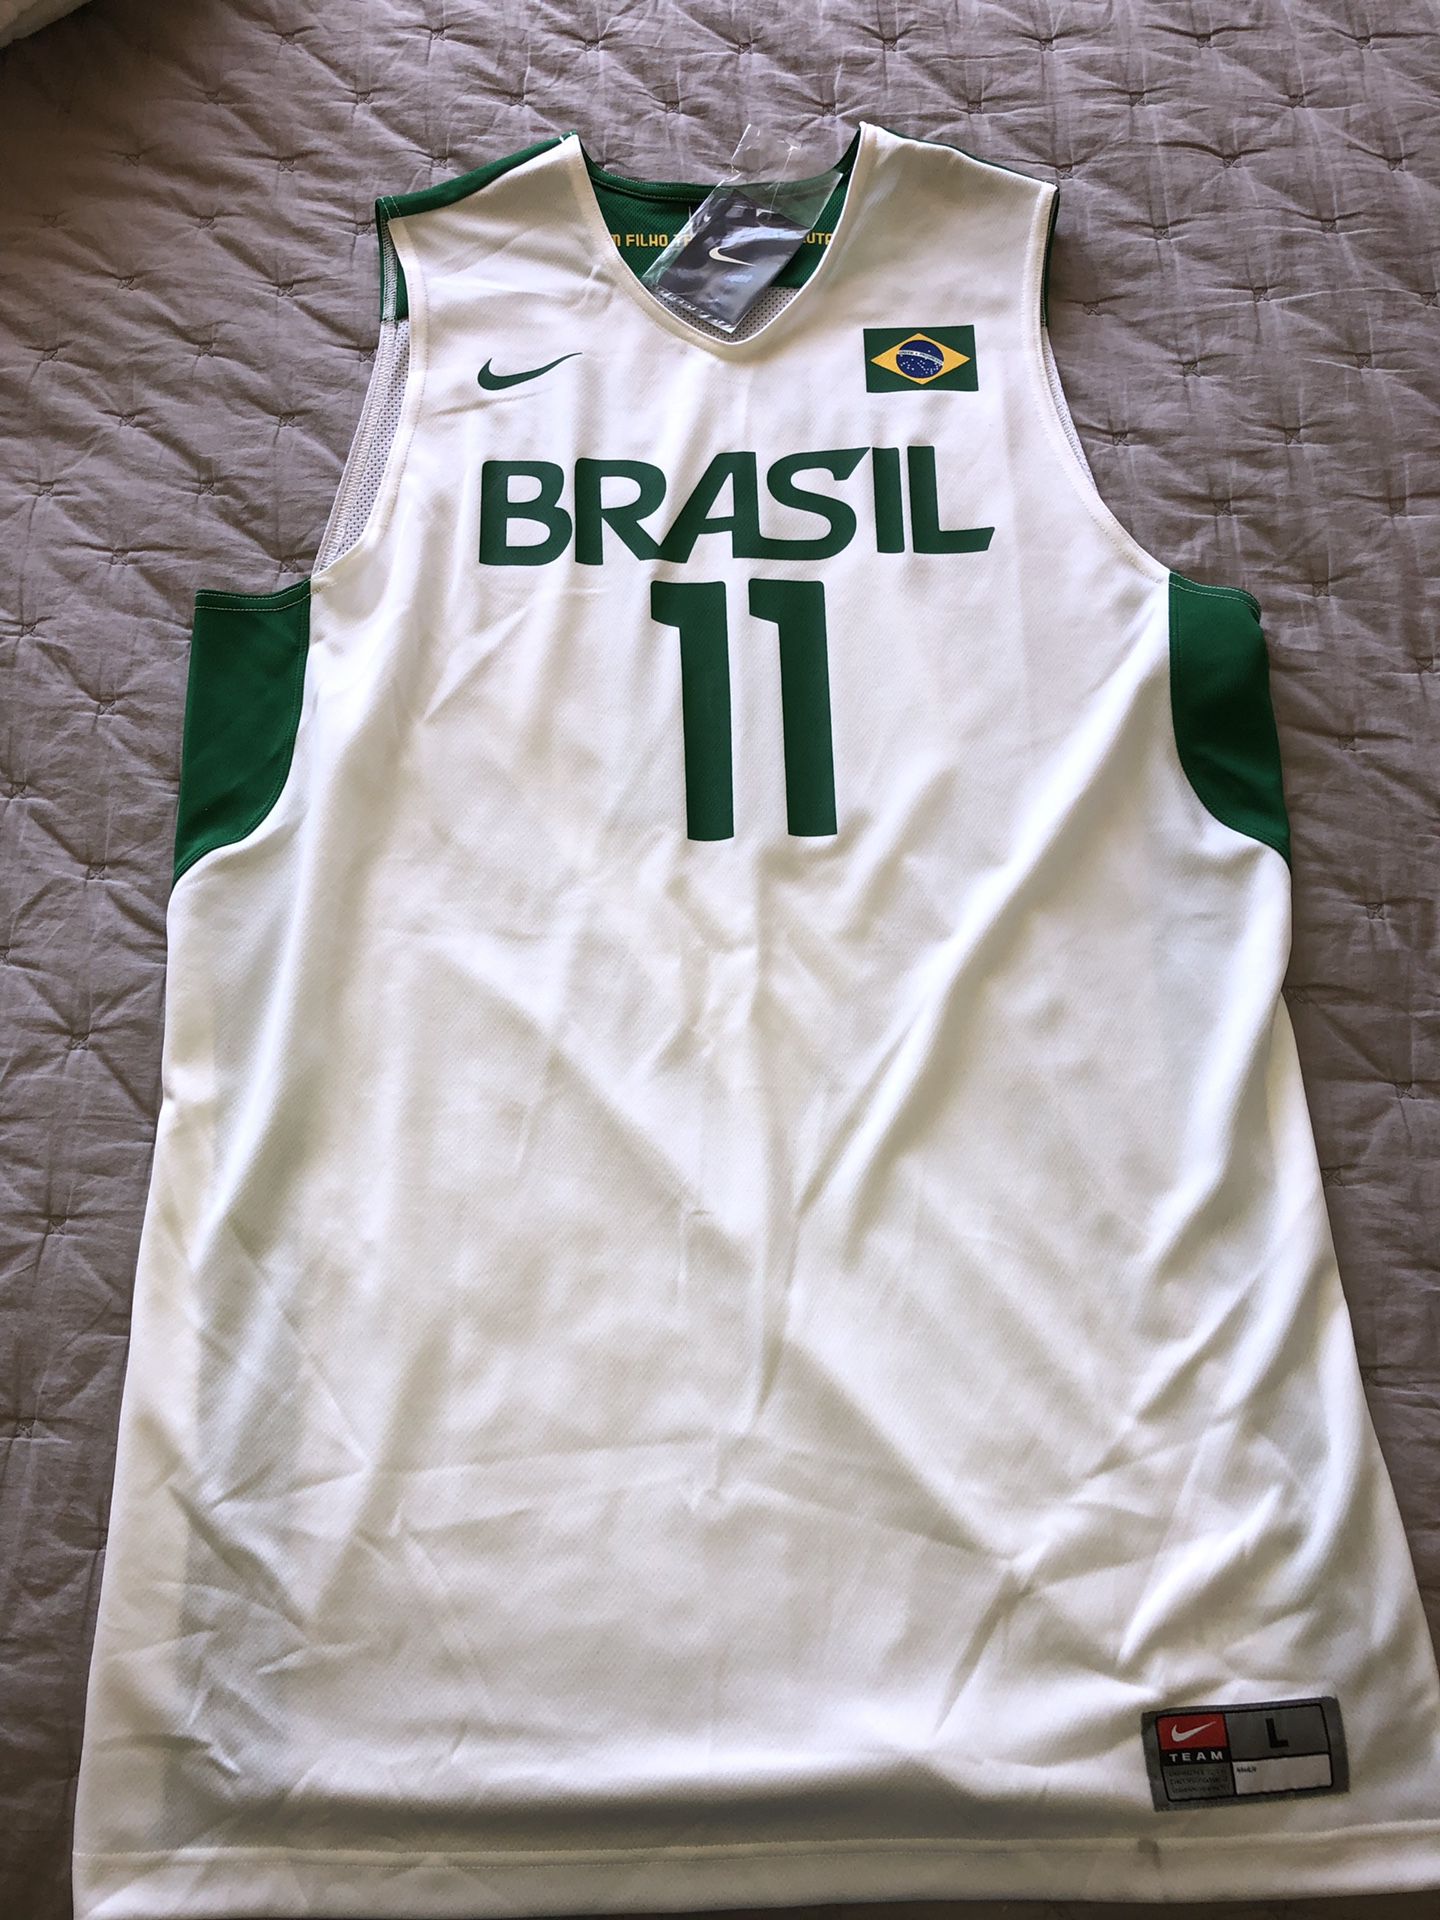 Nike - Olympic Brazil Anderson Varejao Jersey for Sale in Phoenix, AZ -  OfferUp